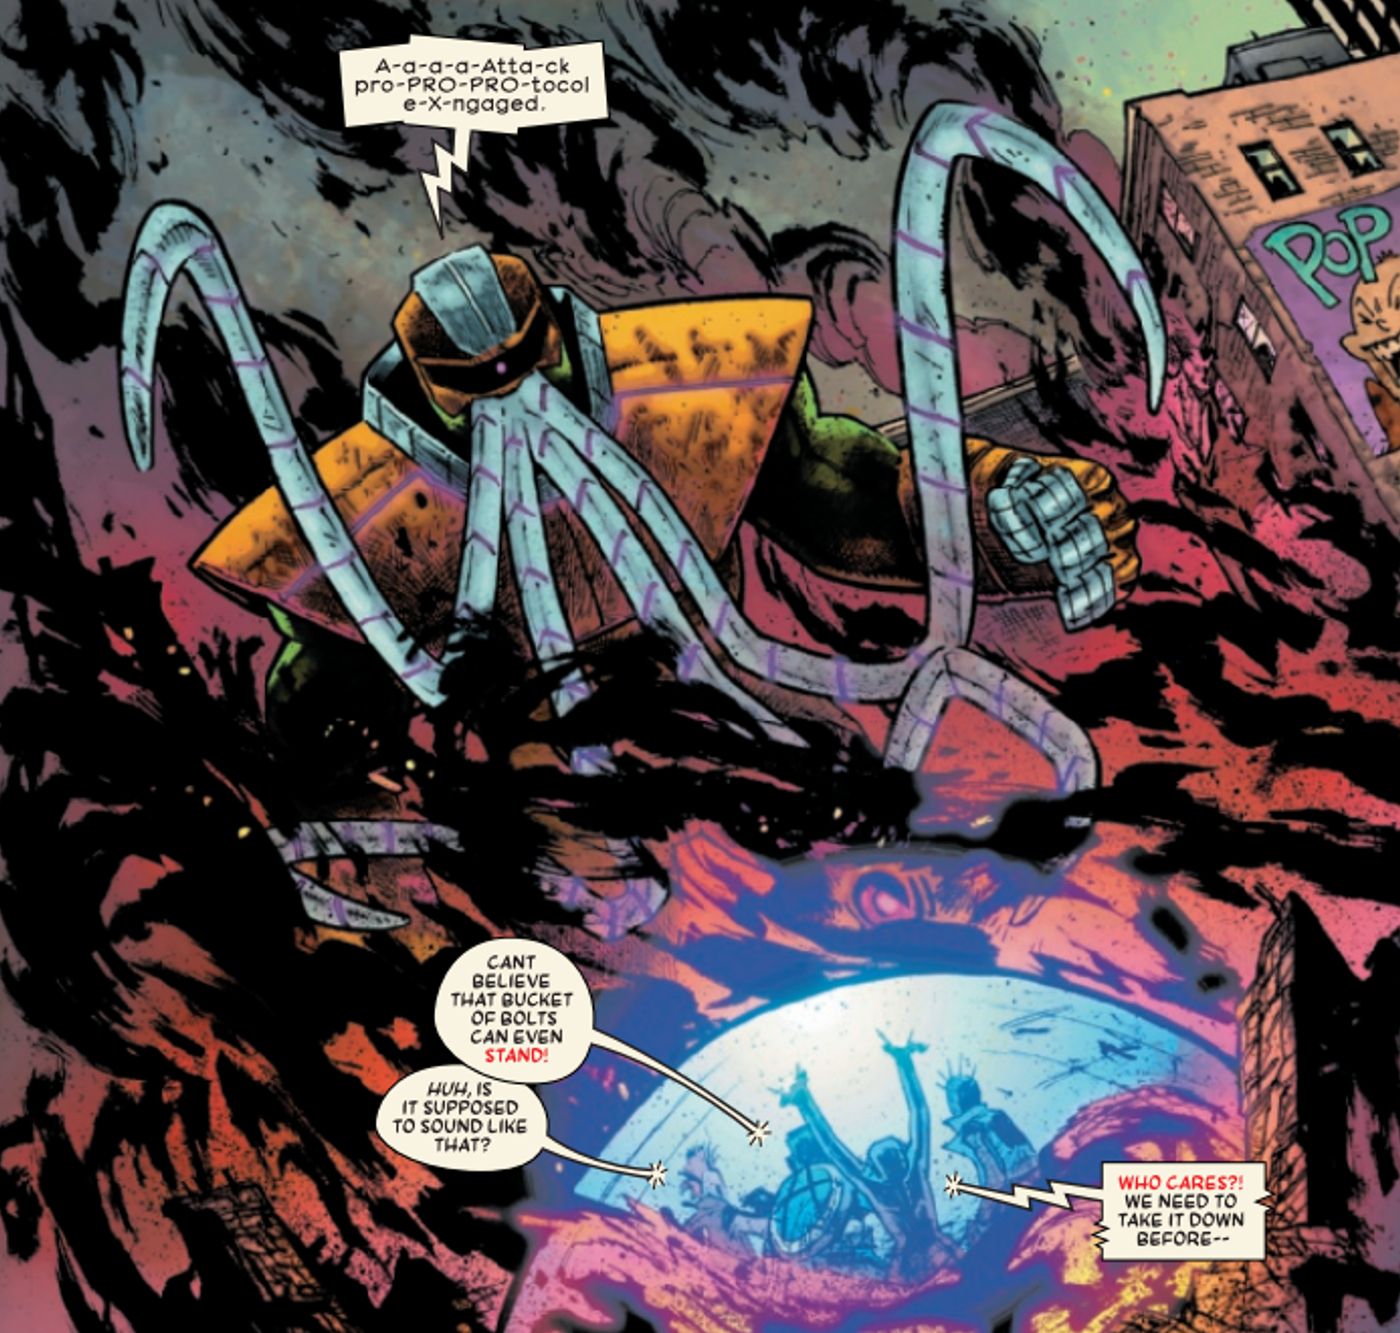 The Sentinel-Slayer: Spider-Man & X-Men’s Robot Villains Combine to Form a Massive Superweapon